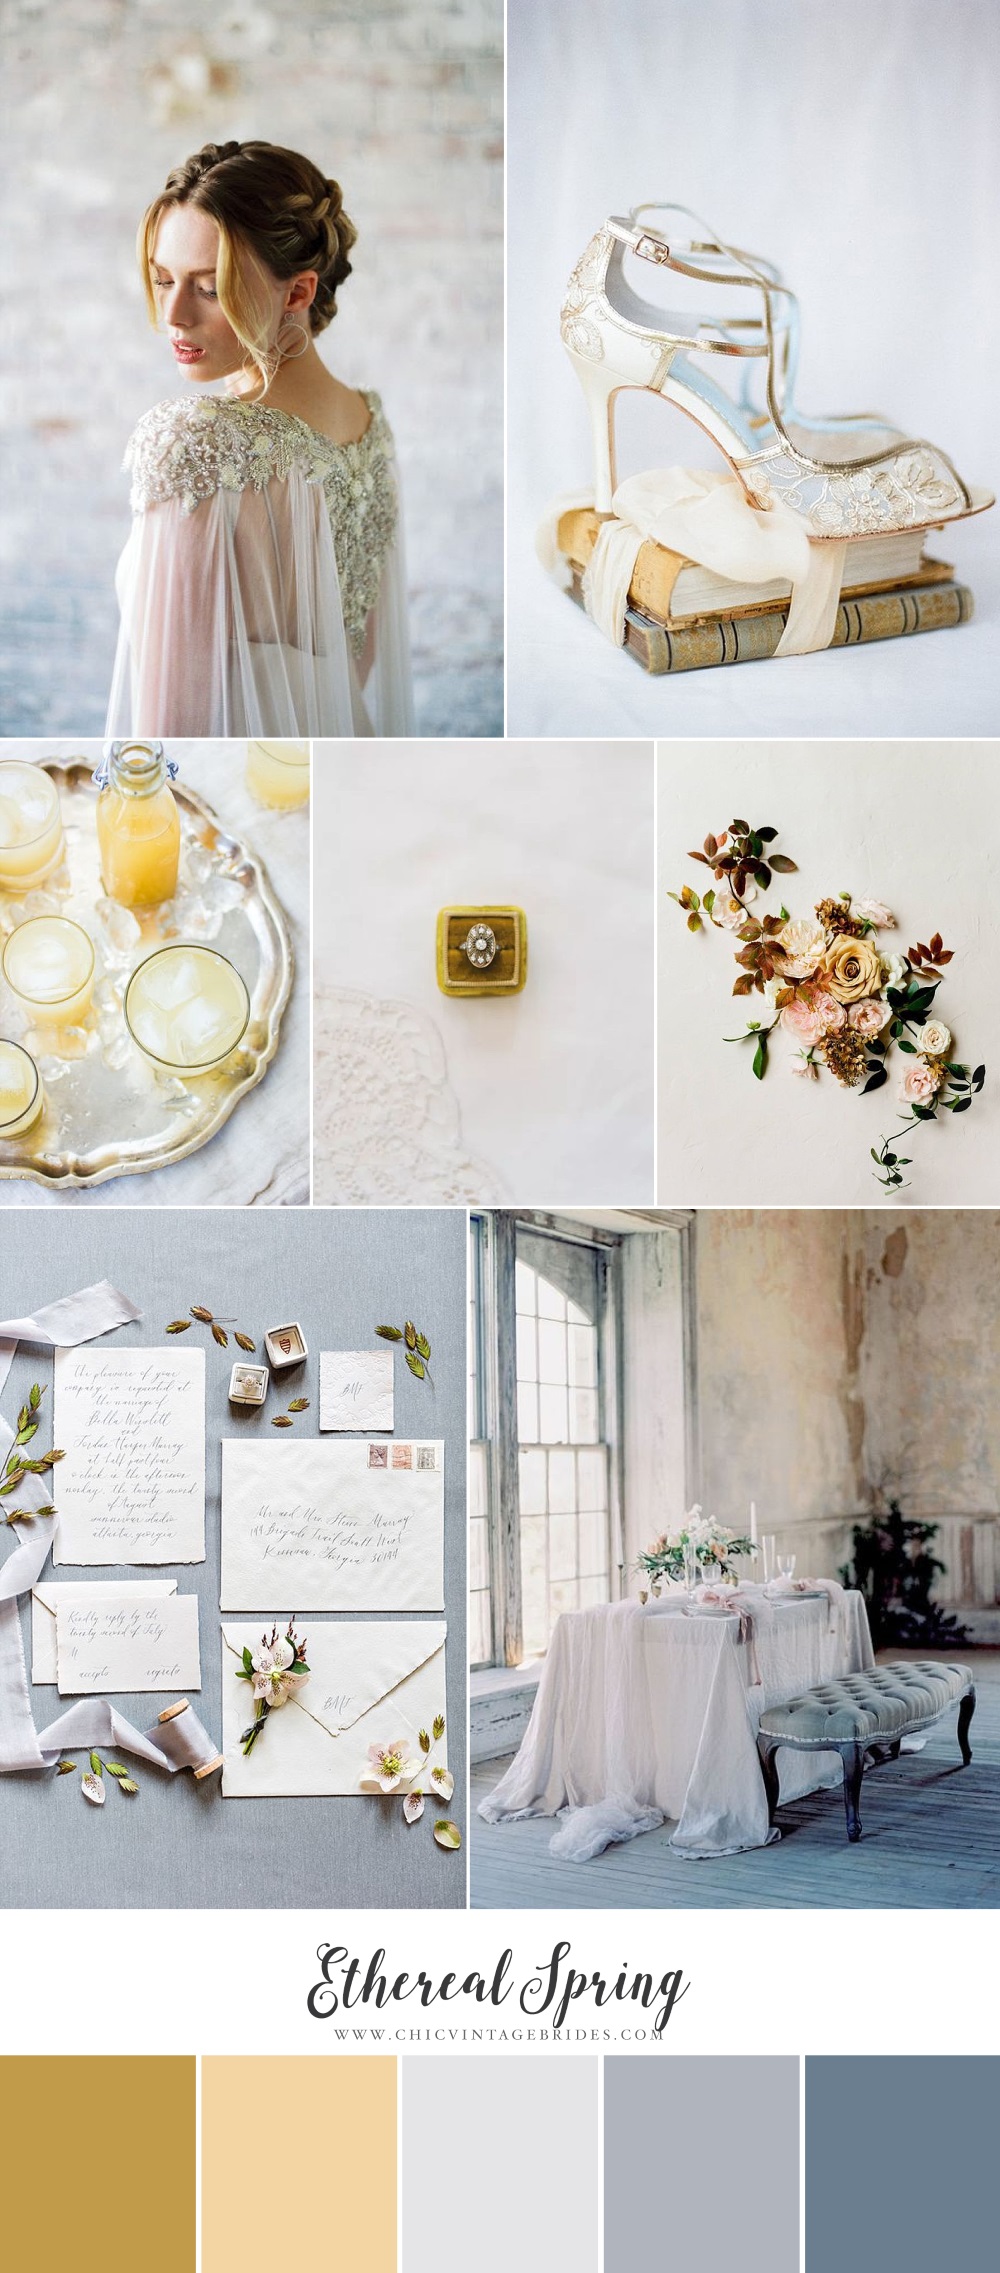 Ethereal Spring - Wedding Inspiration in a Soft Spring Color Palette